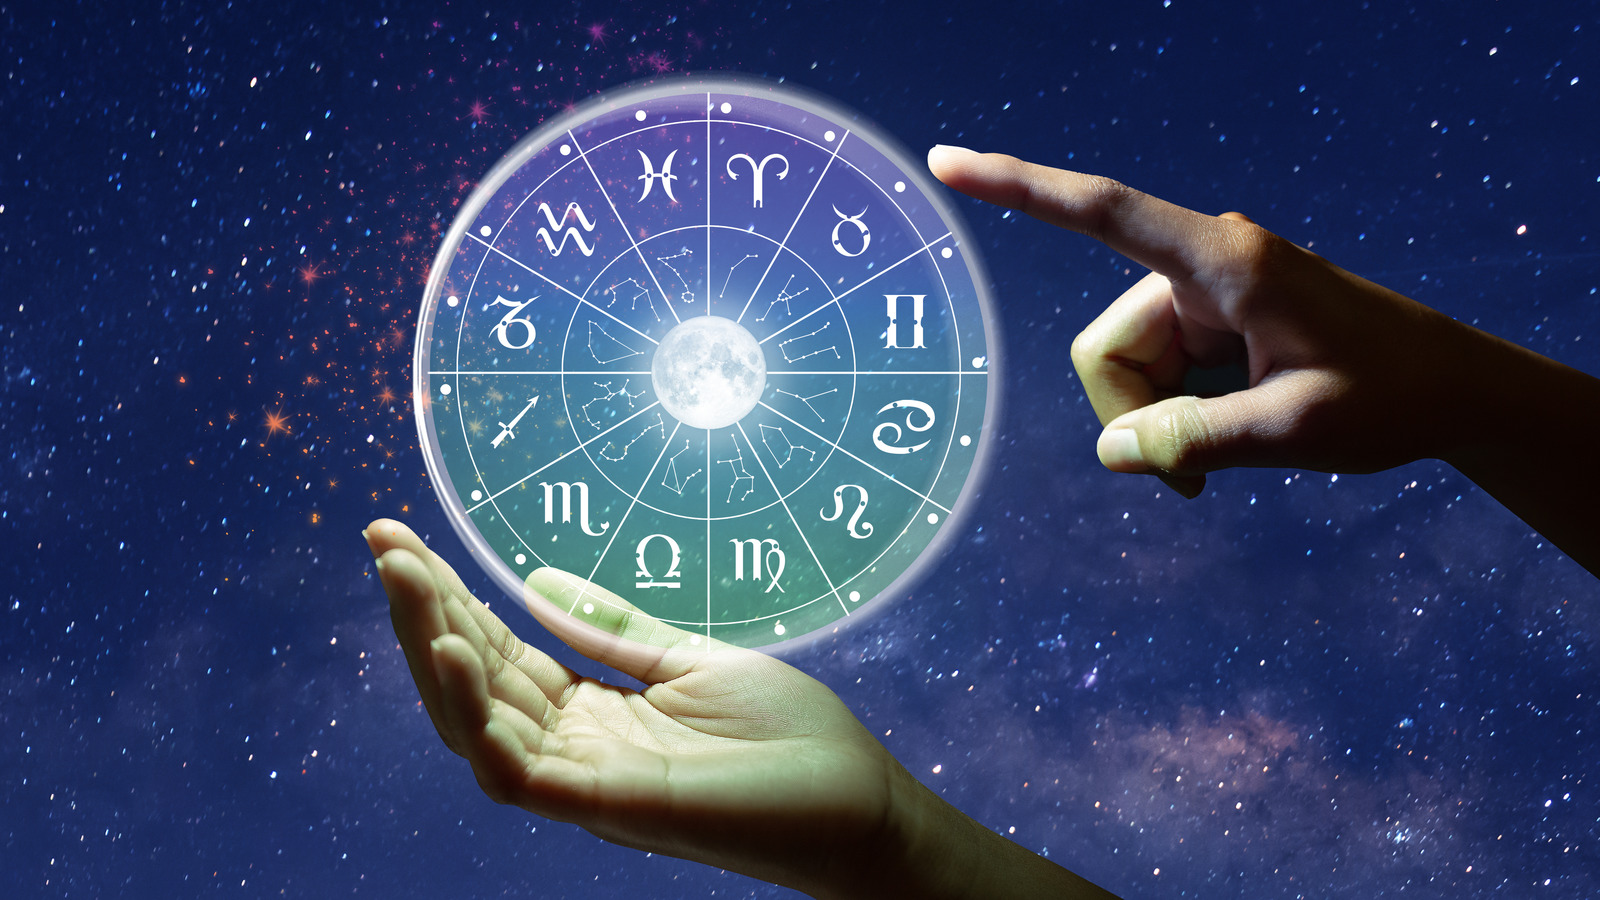 Astroprognosis for Zodiac Signs 2022